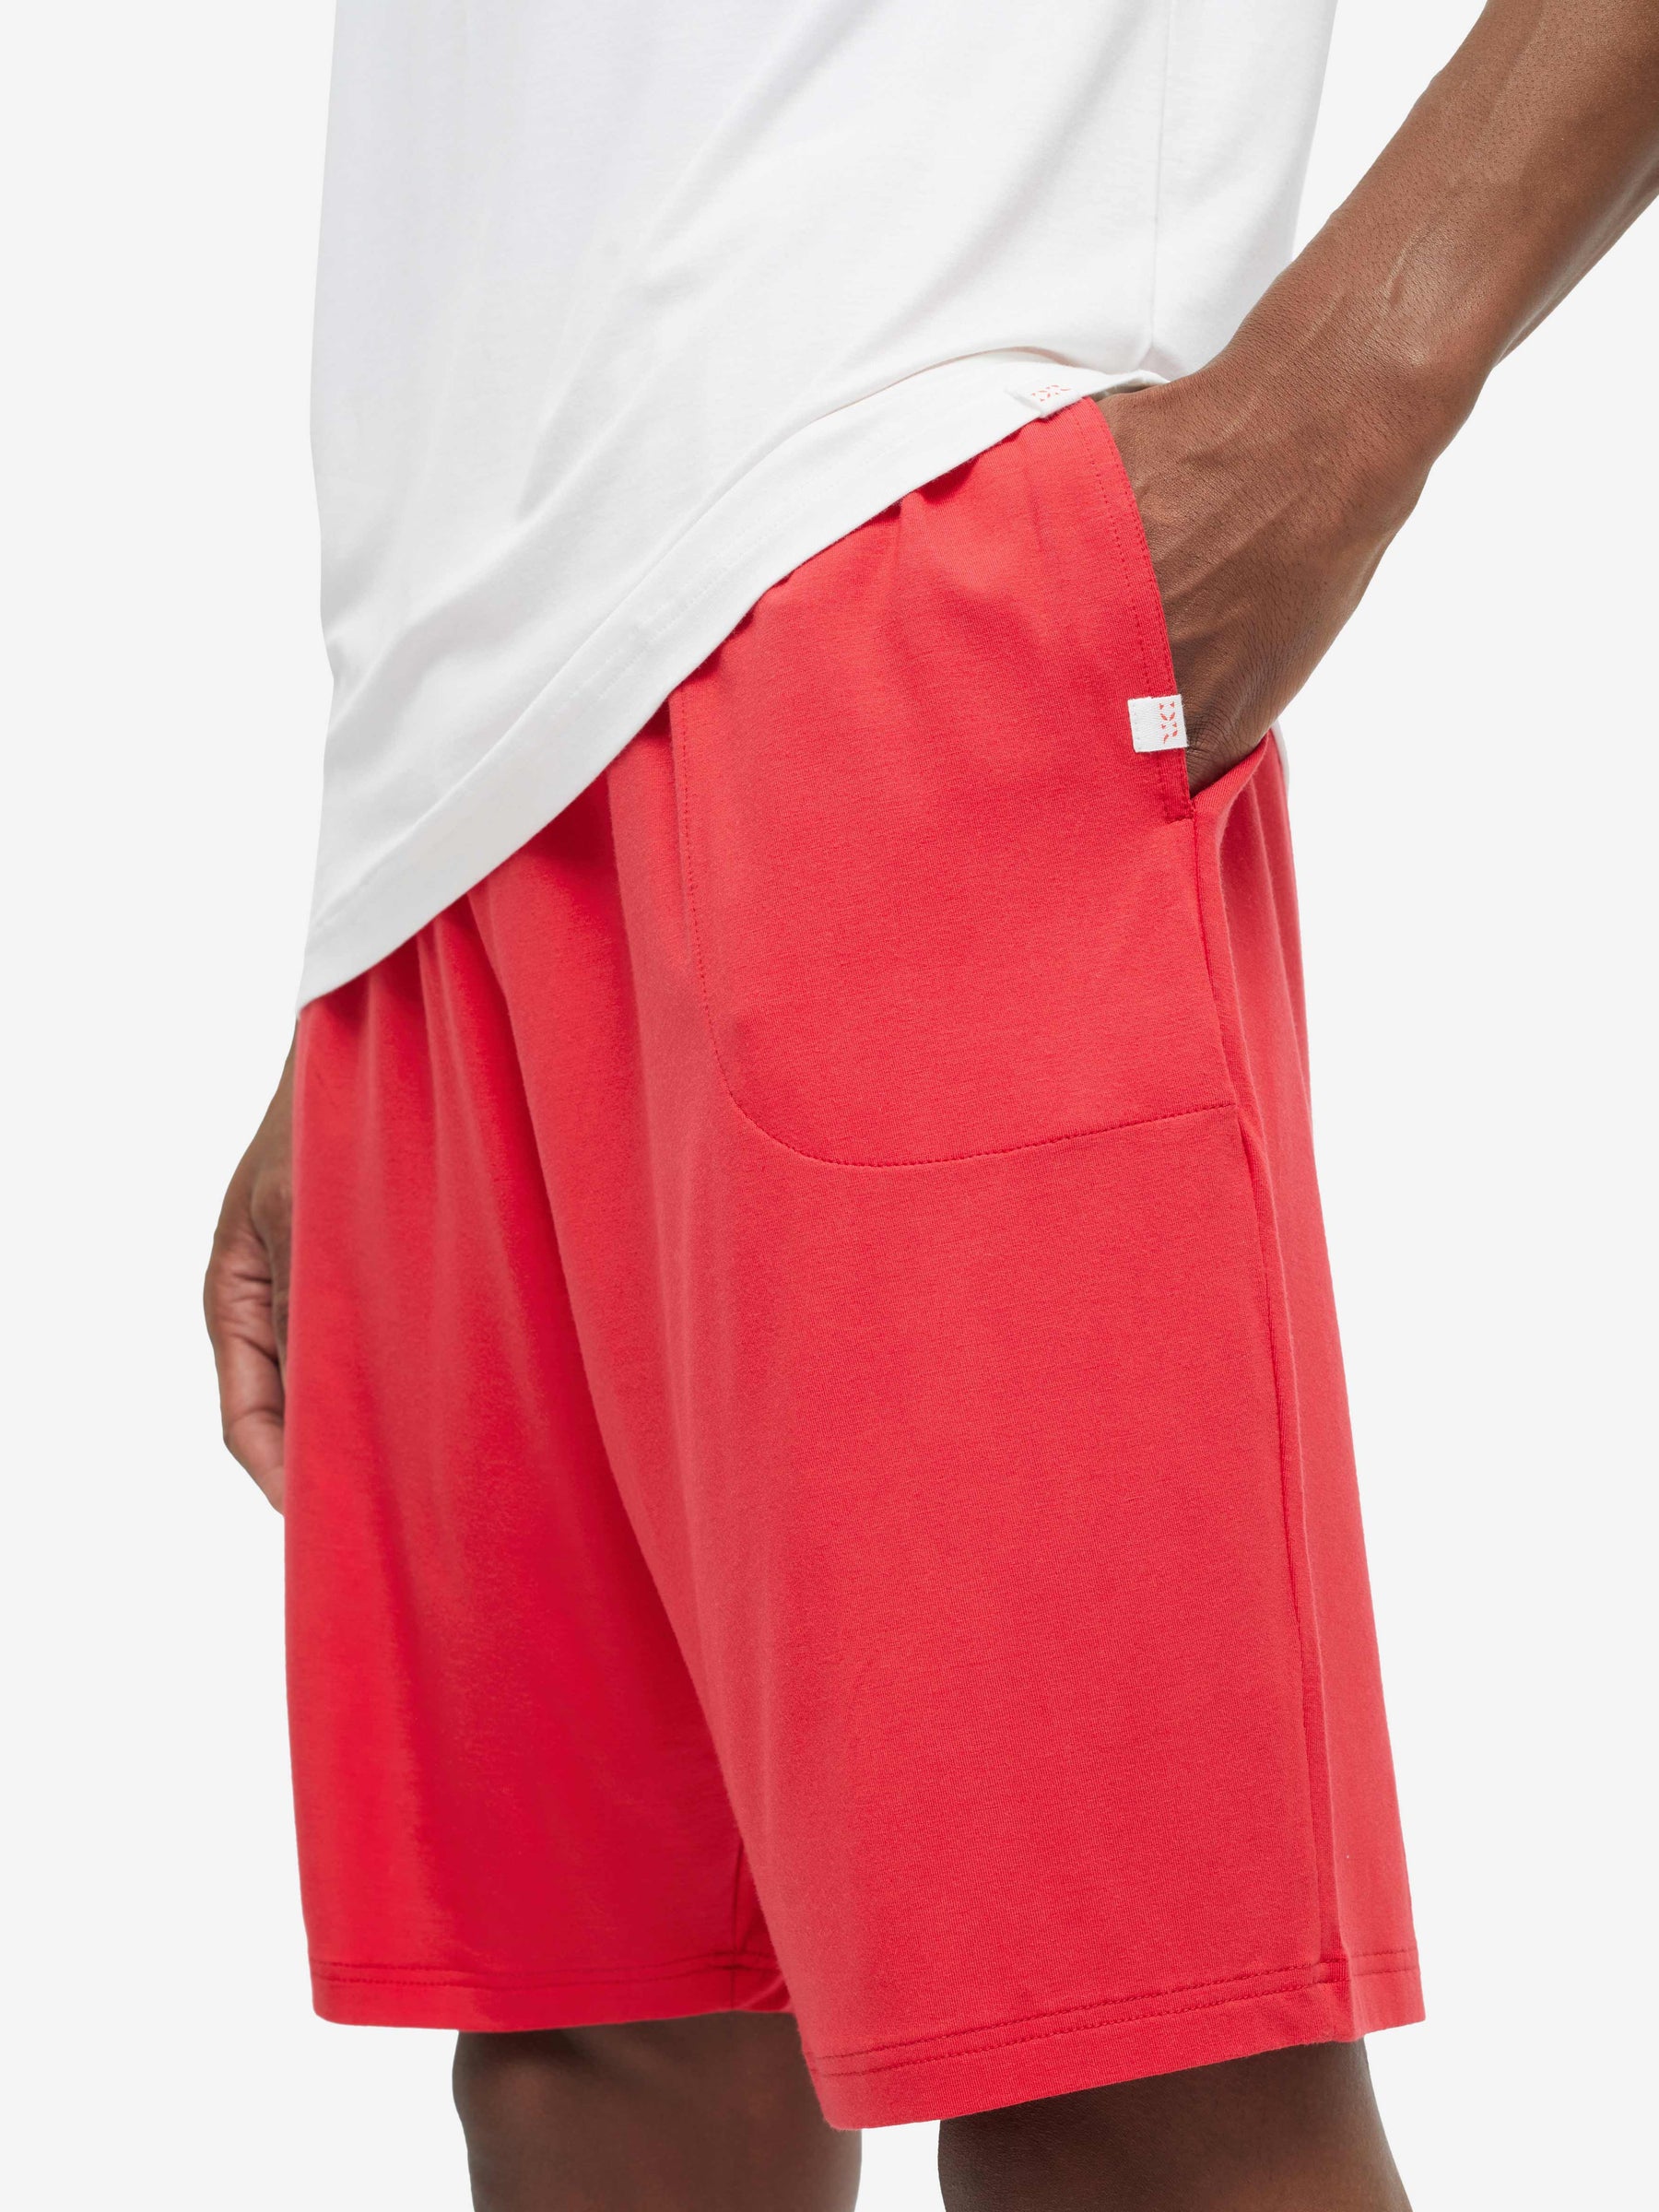 Men's Lounge Shorts Basel Micro Modal Stretch London Red